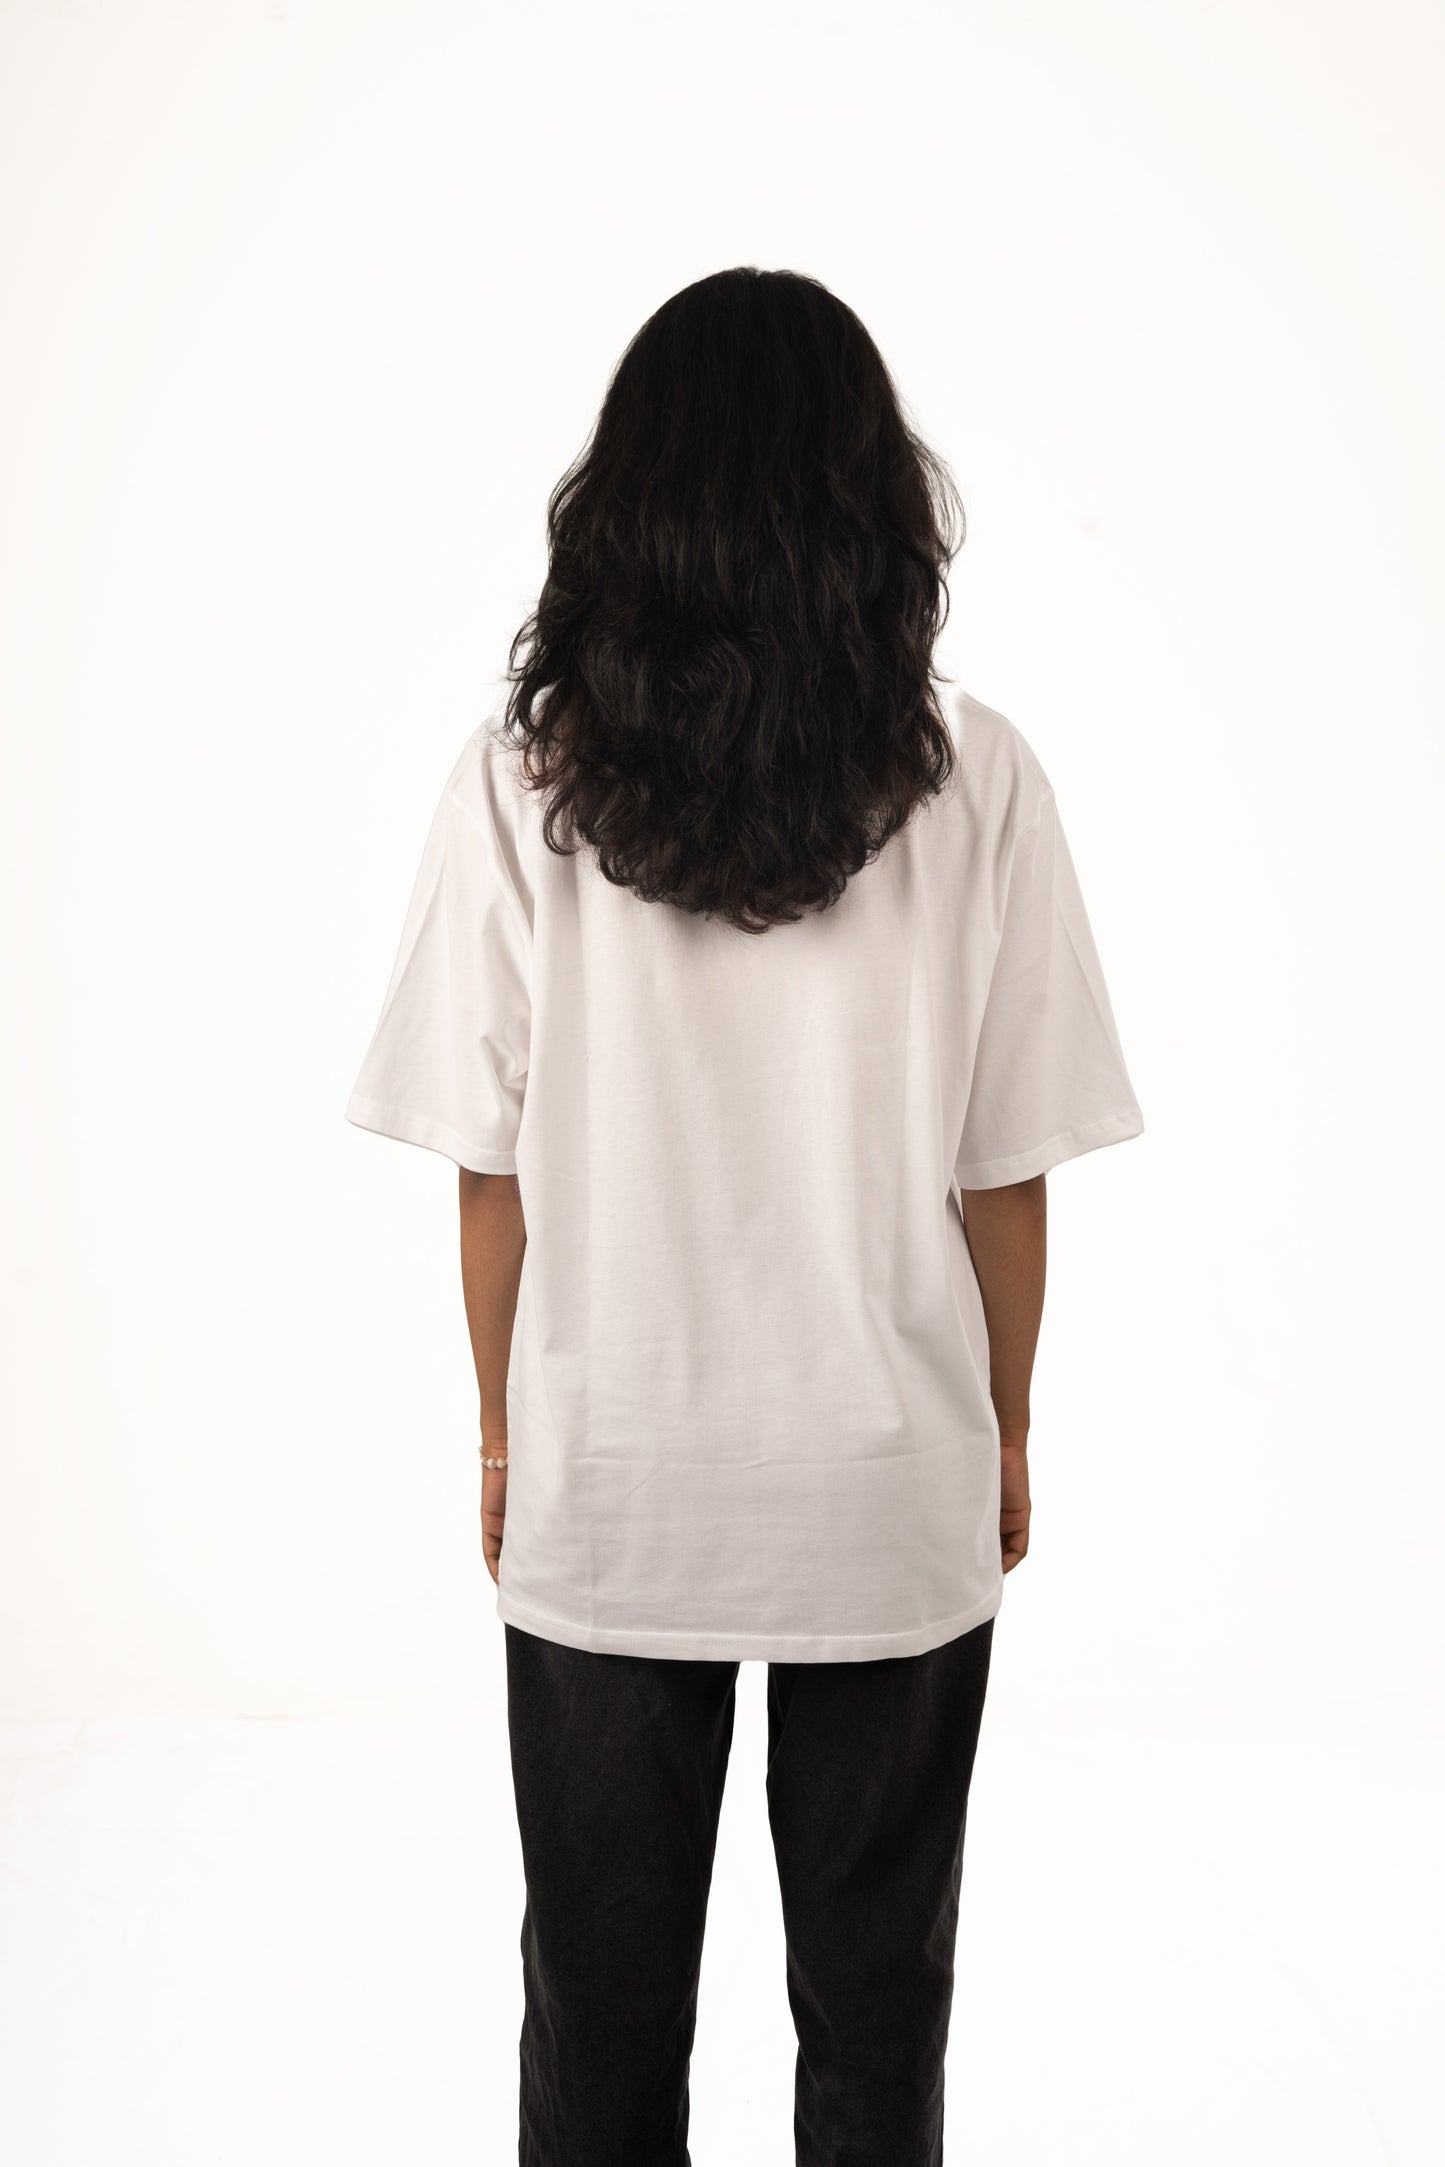 GENZ T-Shirt White